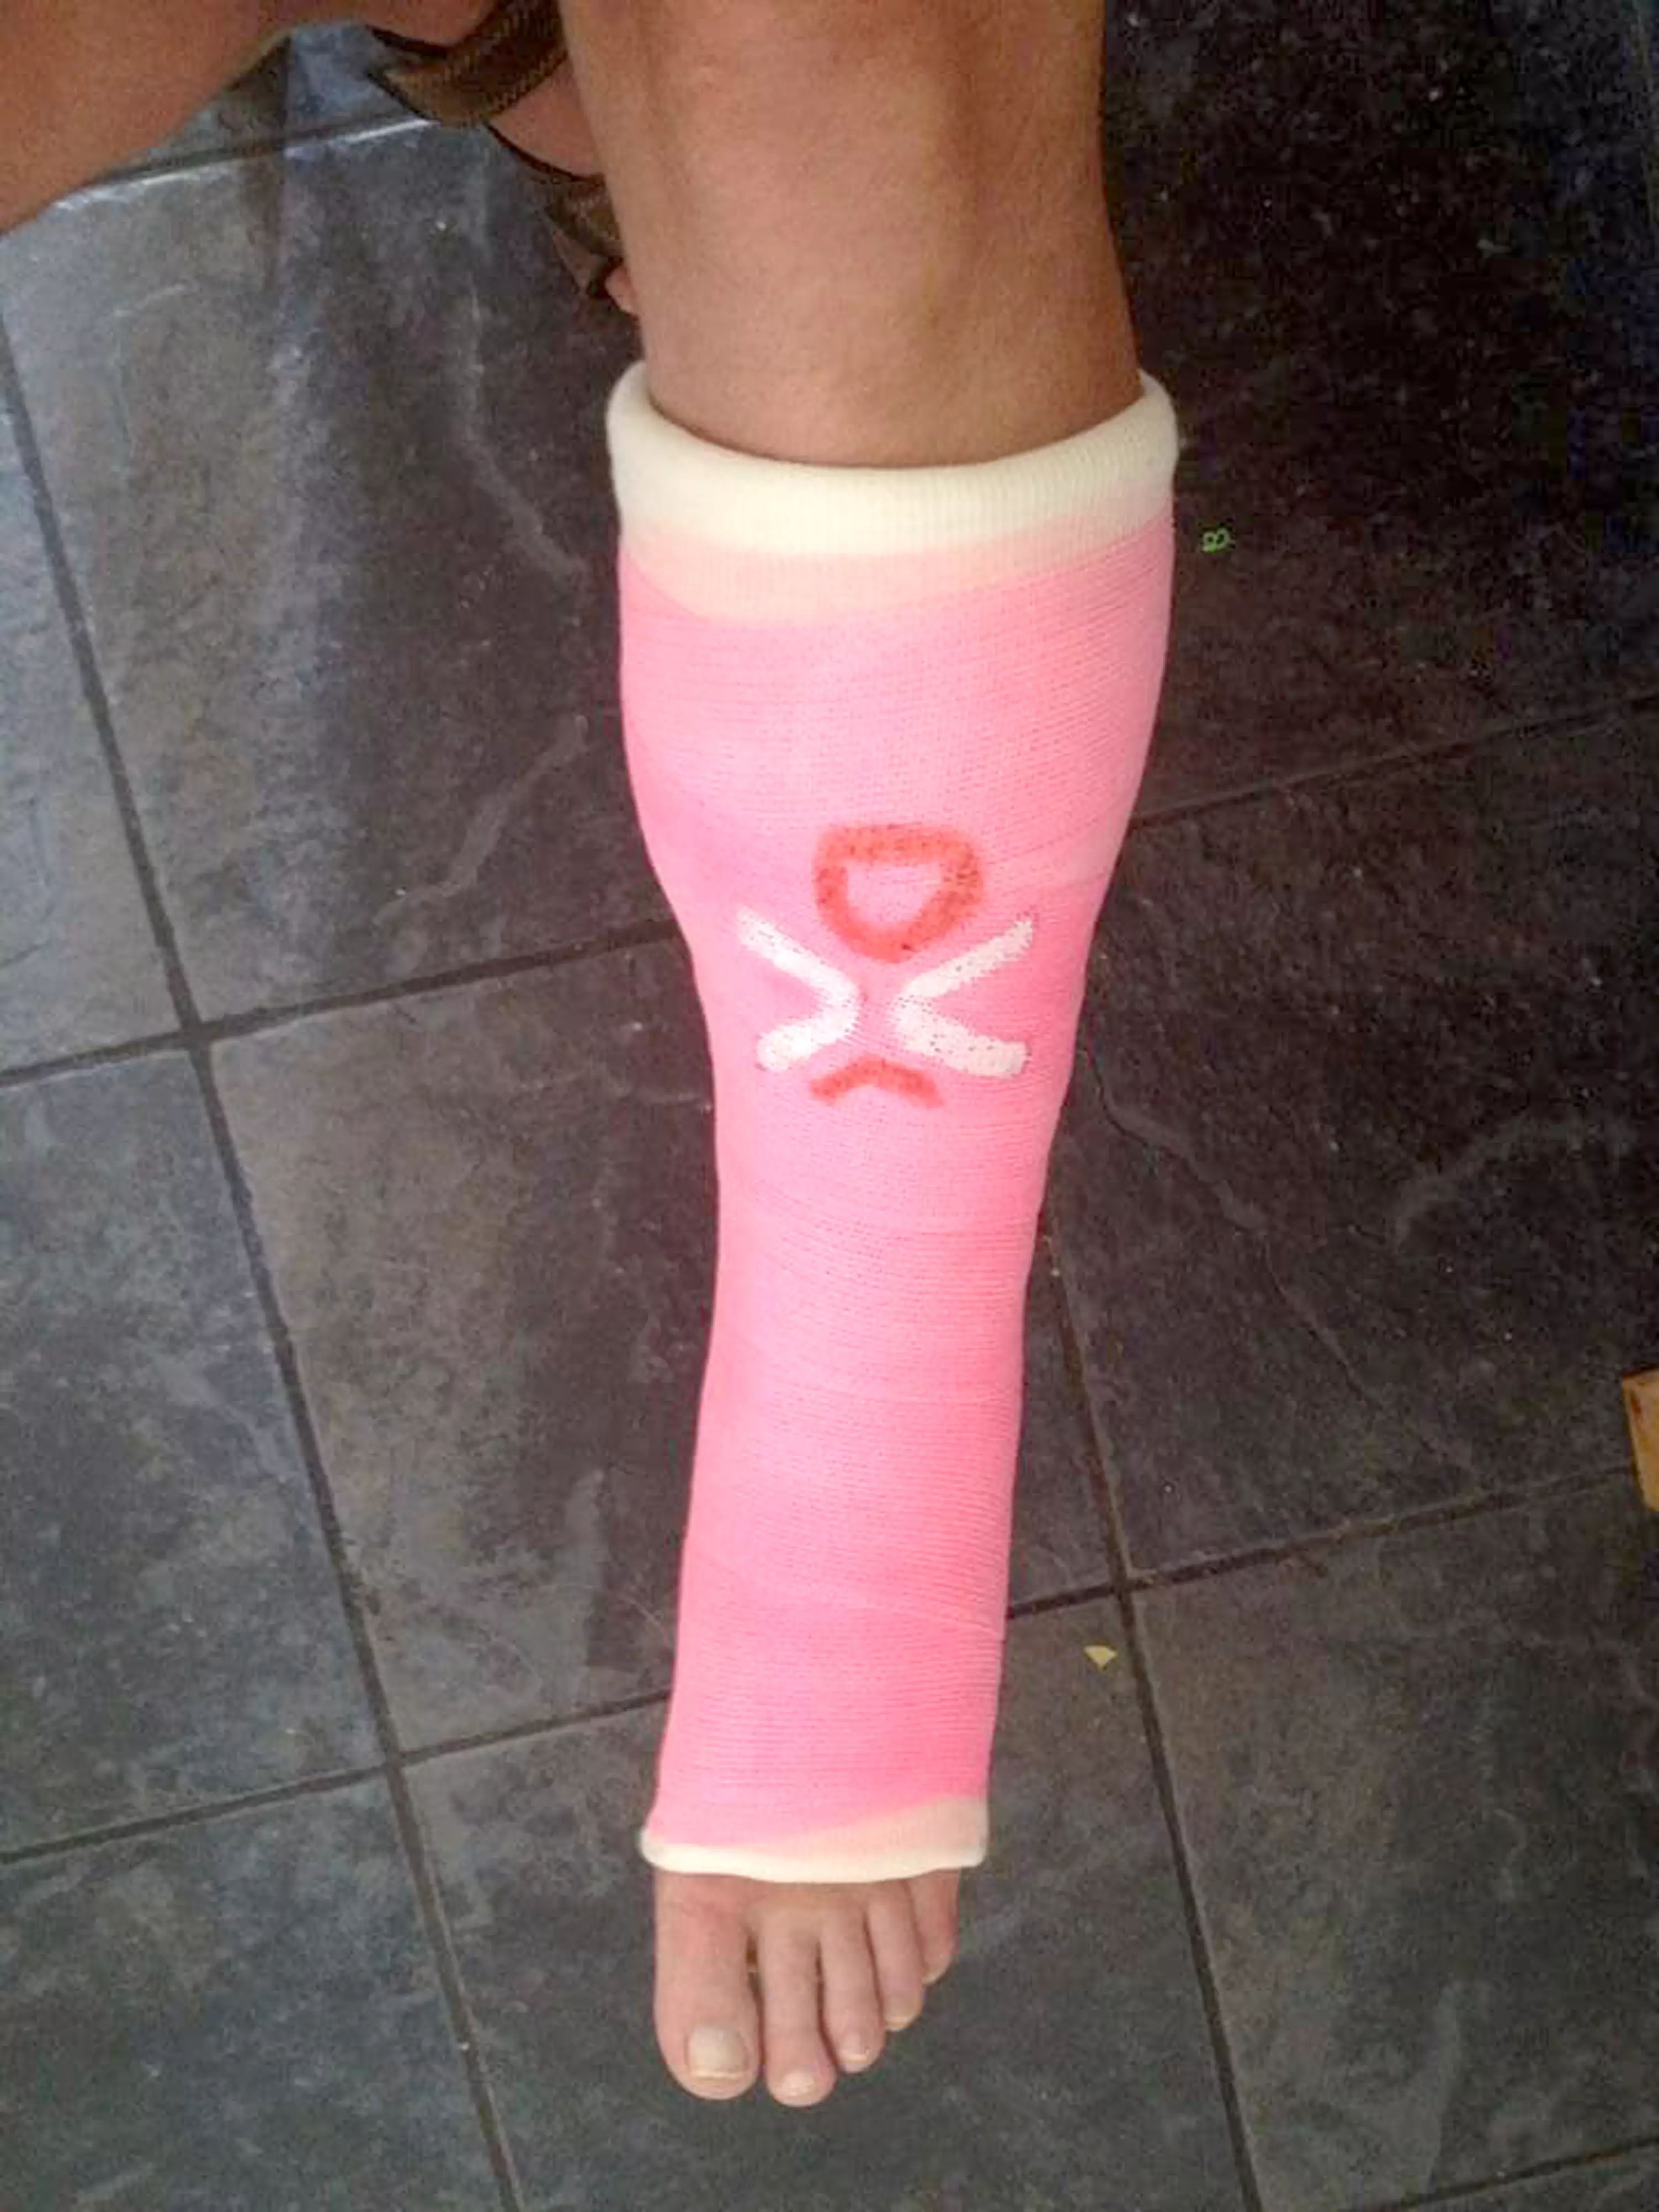 Darren Jones' cast when he damaged his ankle.